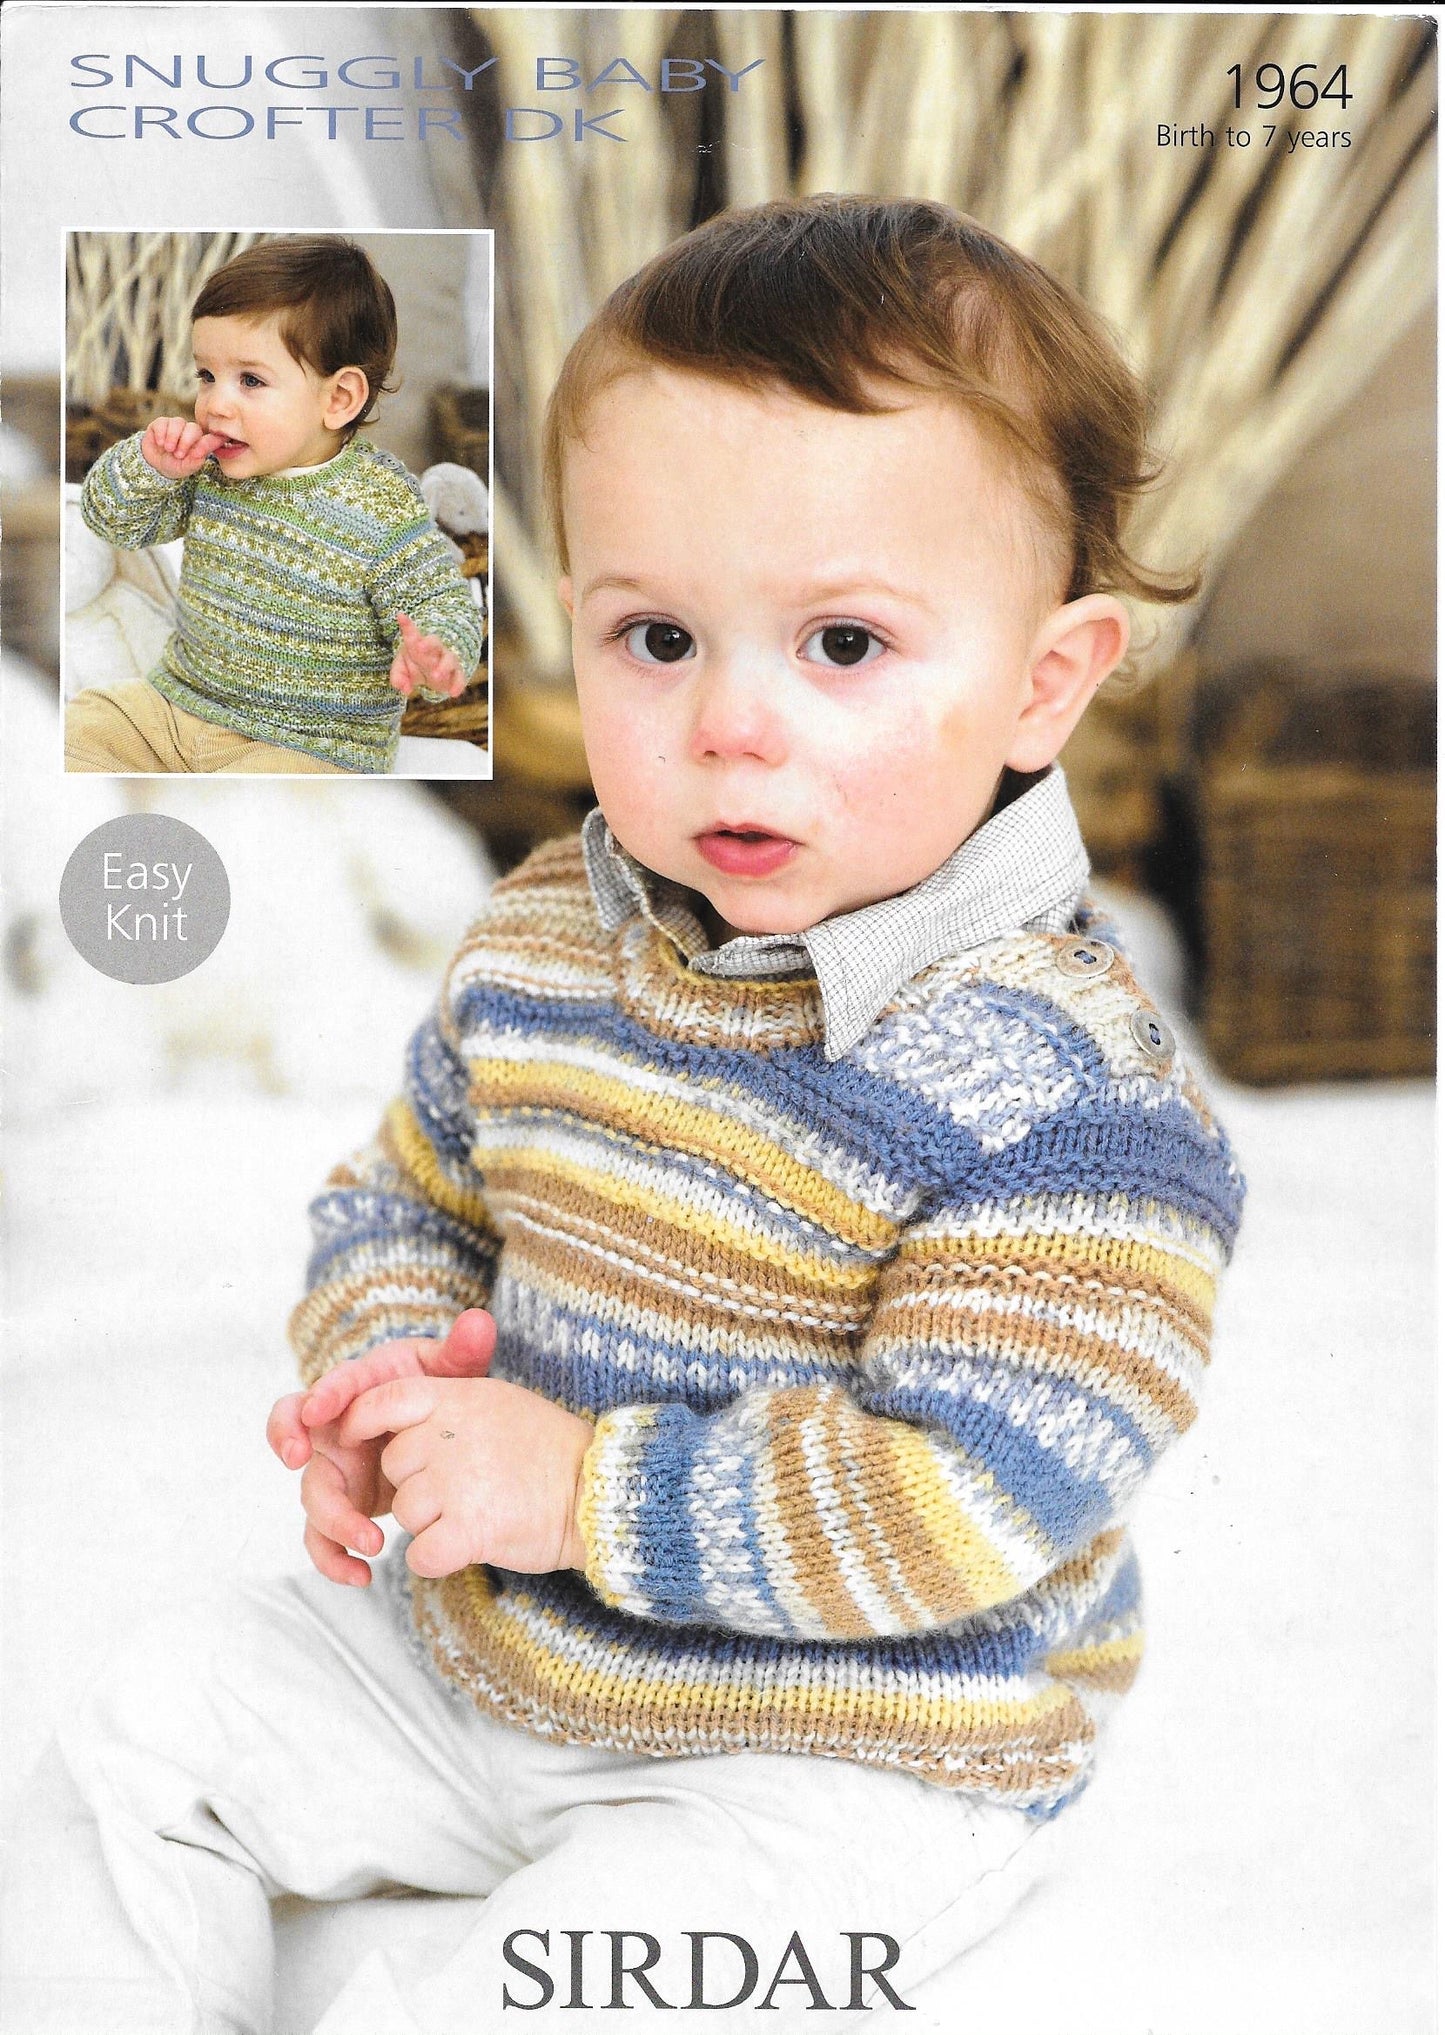 1964 Sirdar Snuggly Baby Crofter DK sweaters knitting pattern